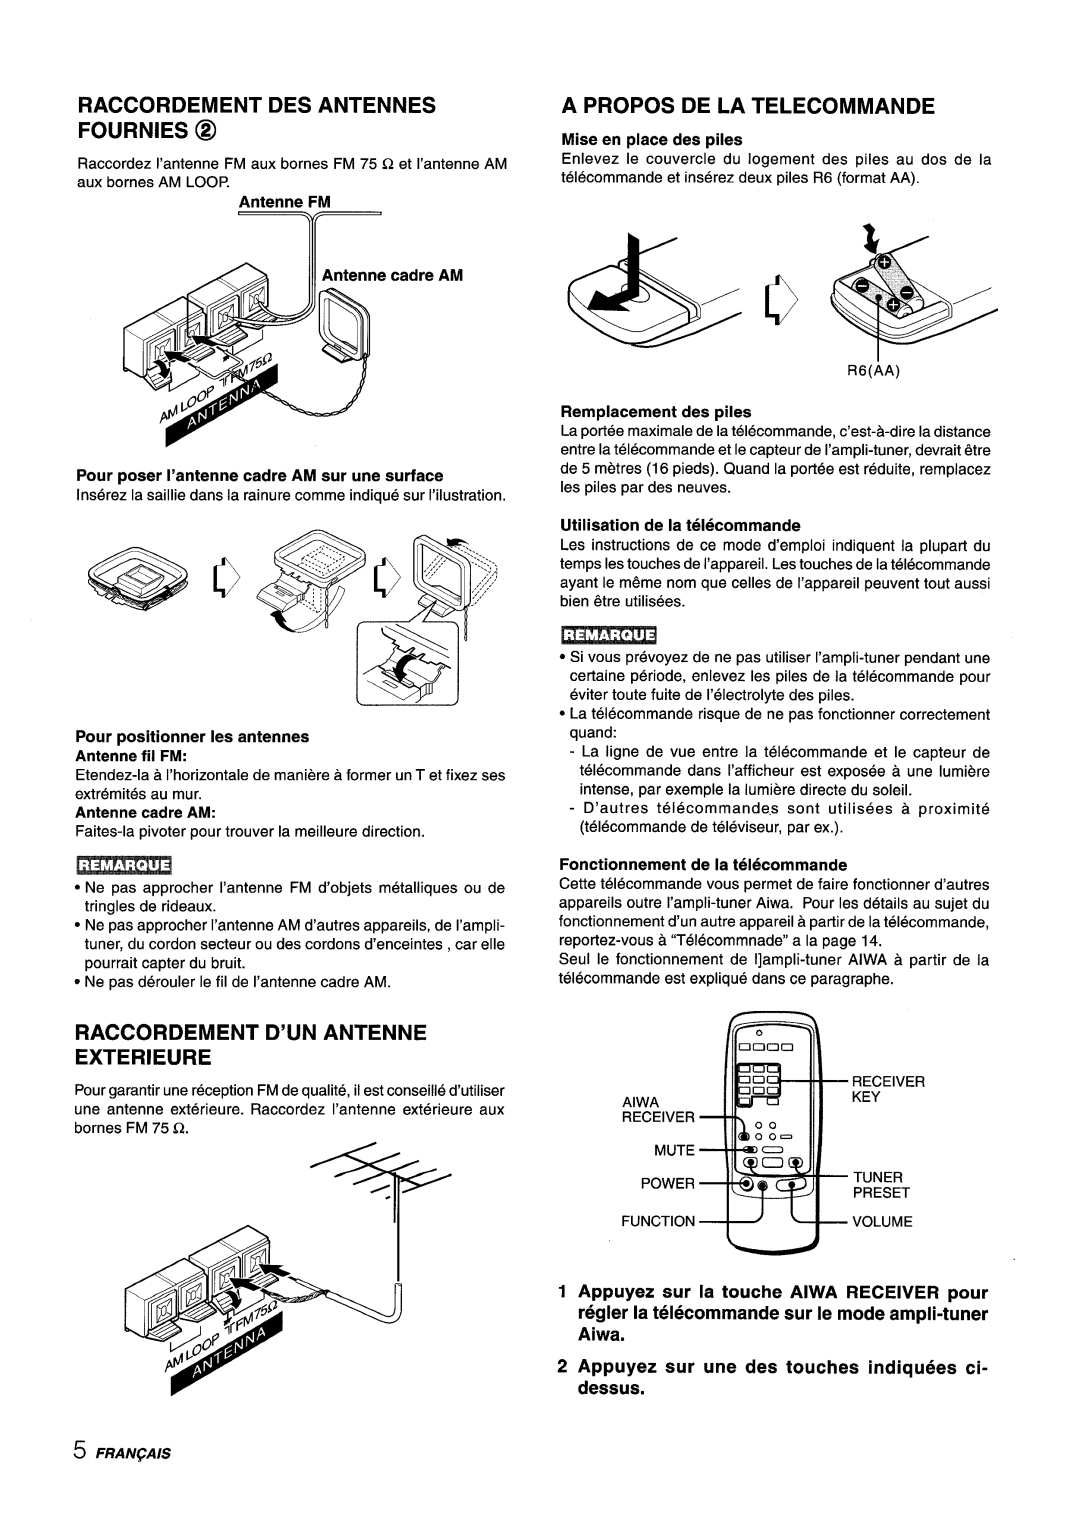 Aiwa AV-X220 Raccordement Desantennes Fournies @, Apropos De La Telecommande, Raccordement D’Un Antenne Exterieure, E=ii 